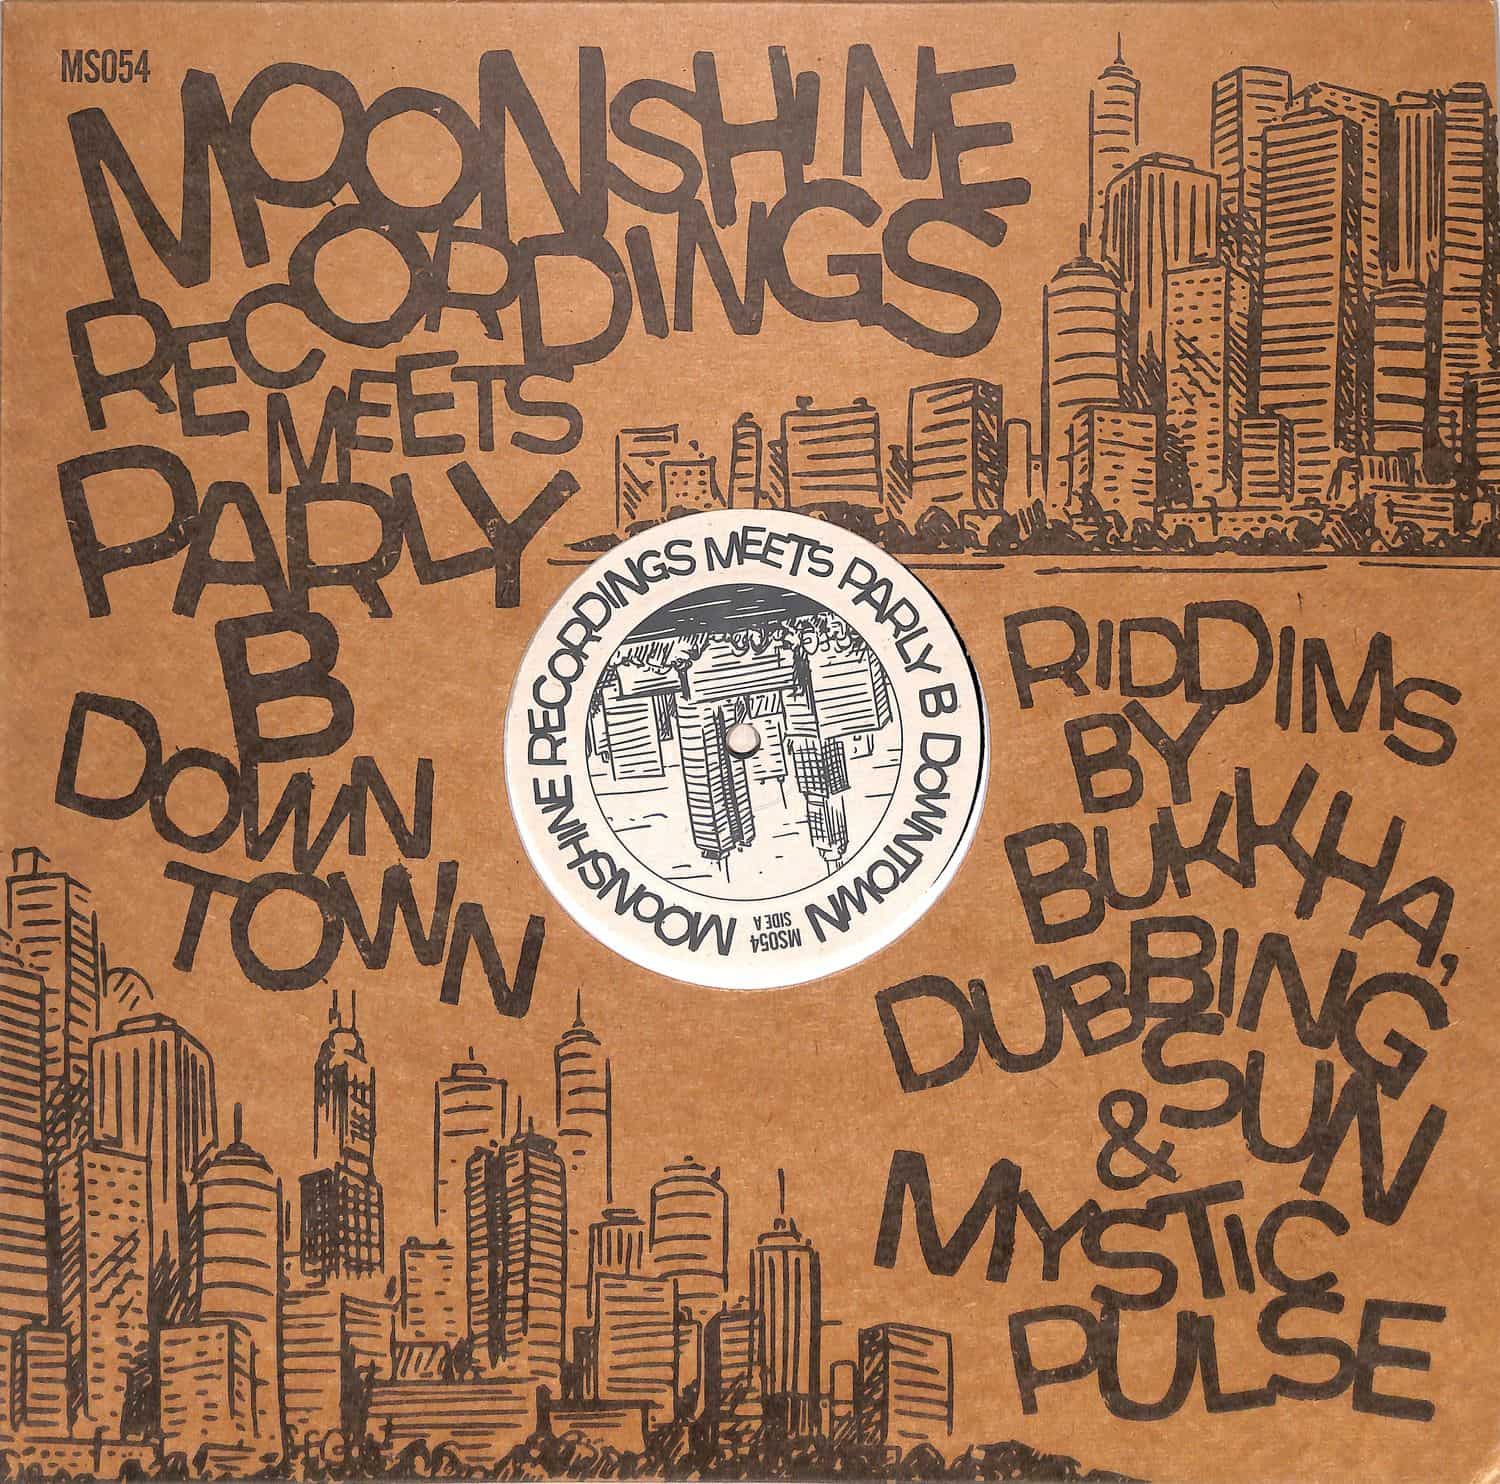 Parly B / Bukkha / Dubbing Sun / Mystic Pulse - MOOSHINE RECORDINGS MEETS PARLY B DOWNTOWN